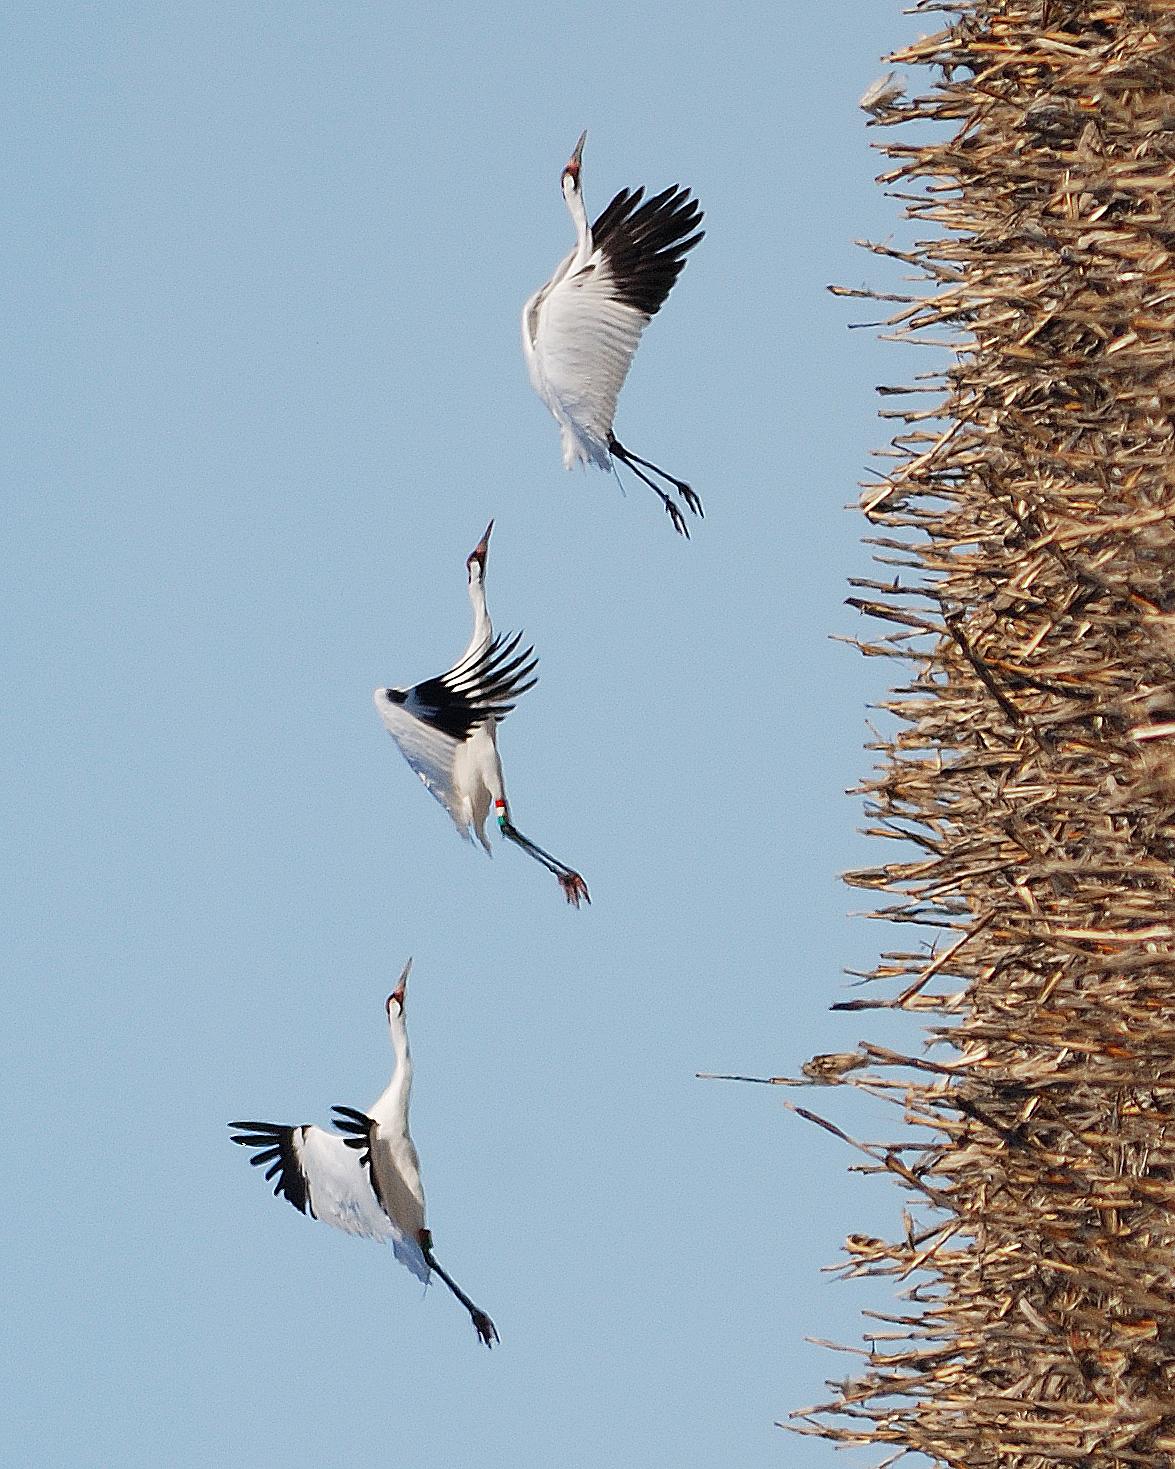 Whooping Crane Photo by Mark Blassage